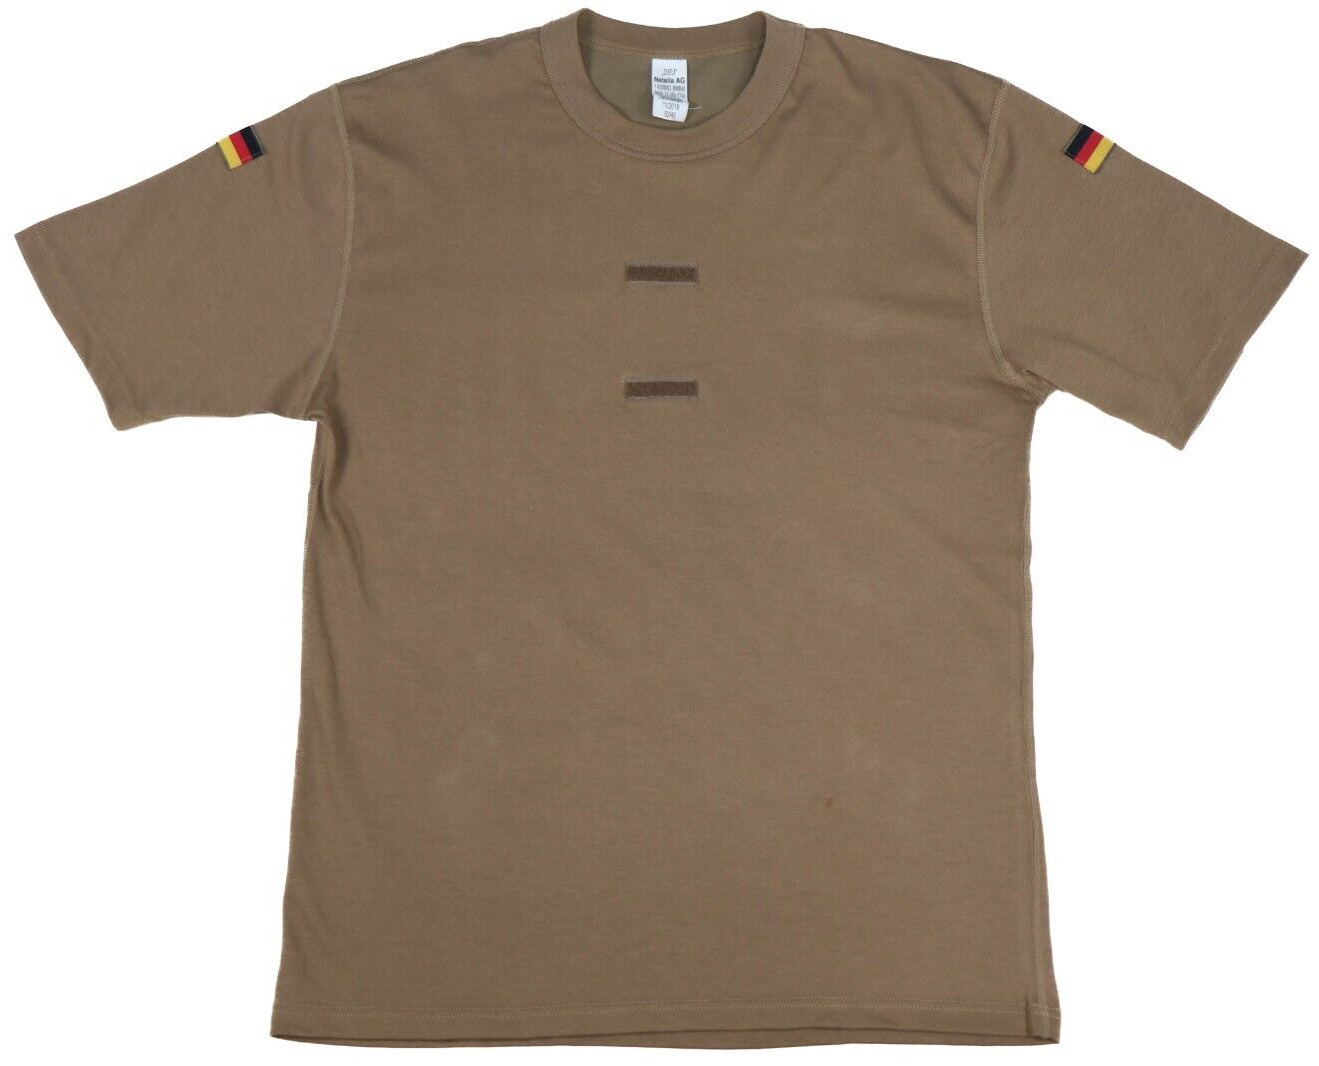 Medium German Bundeswehr Tropical Shirt Army Military Uniform Khaki Tan Coyote